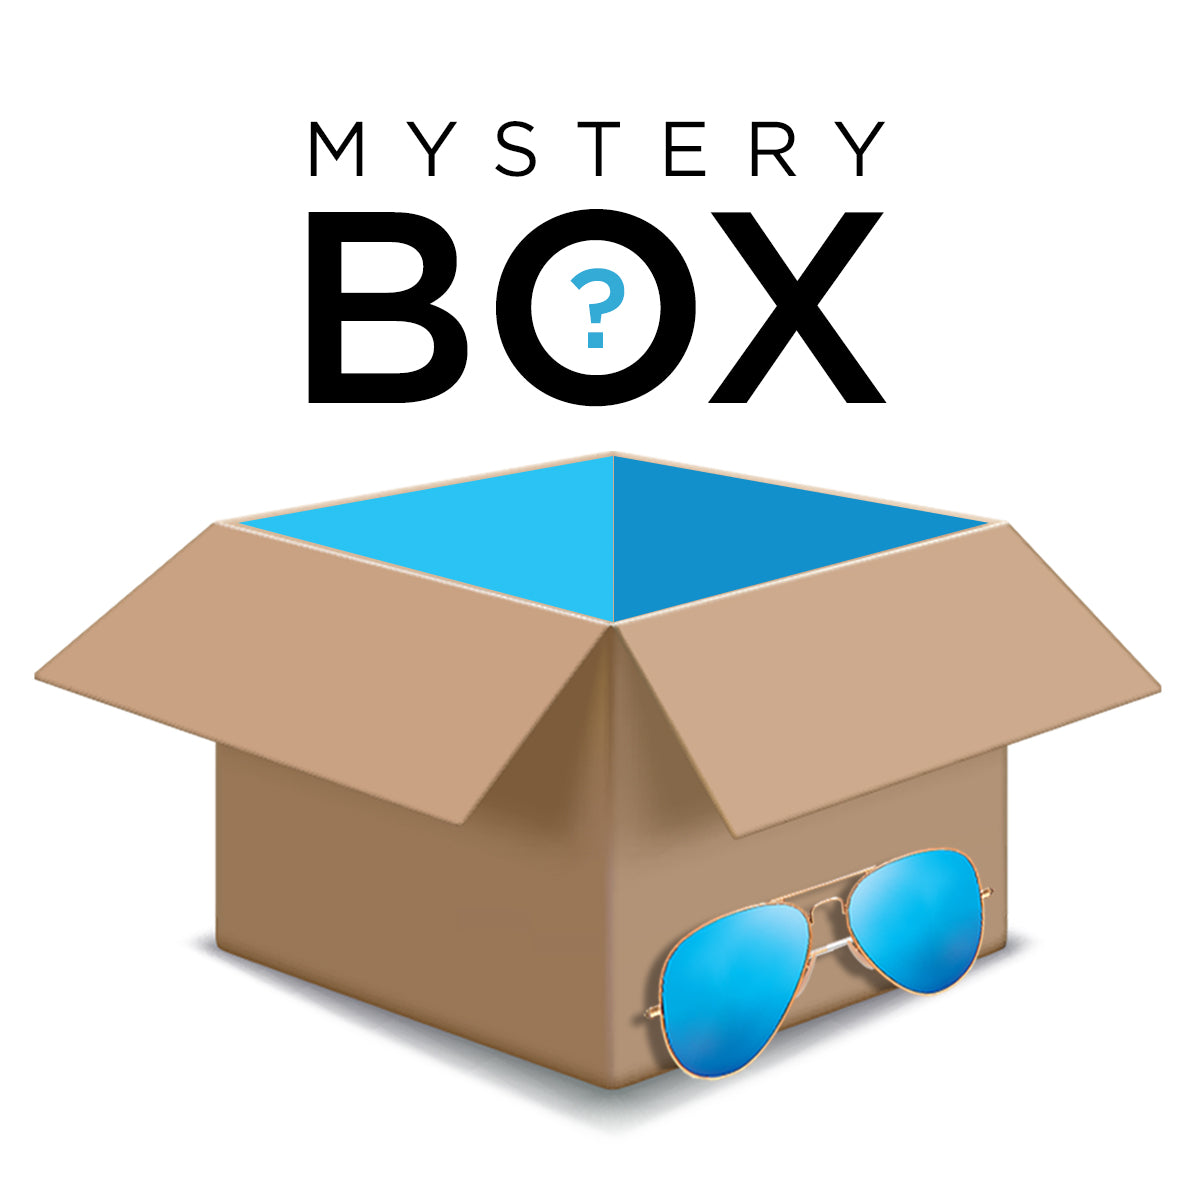 Image of January Men's Mystery Box  YSTERY 